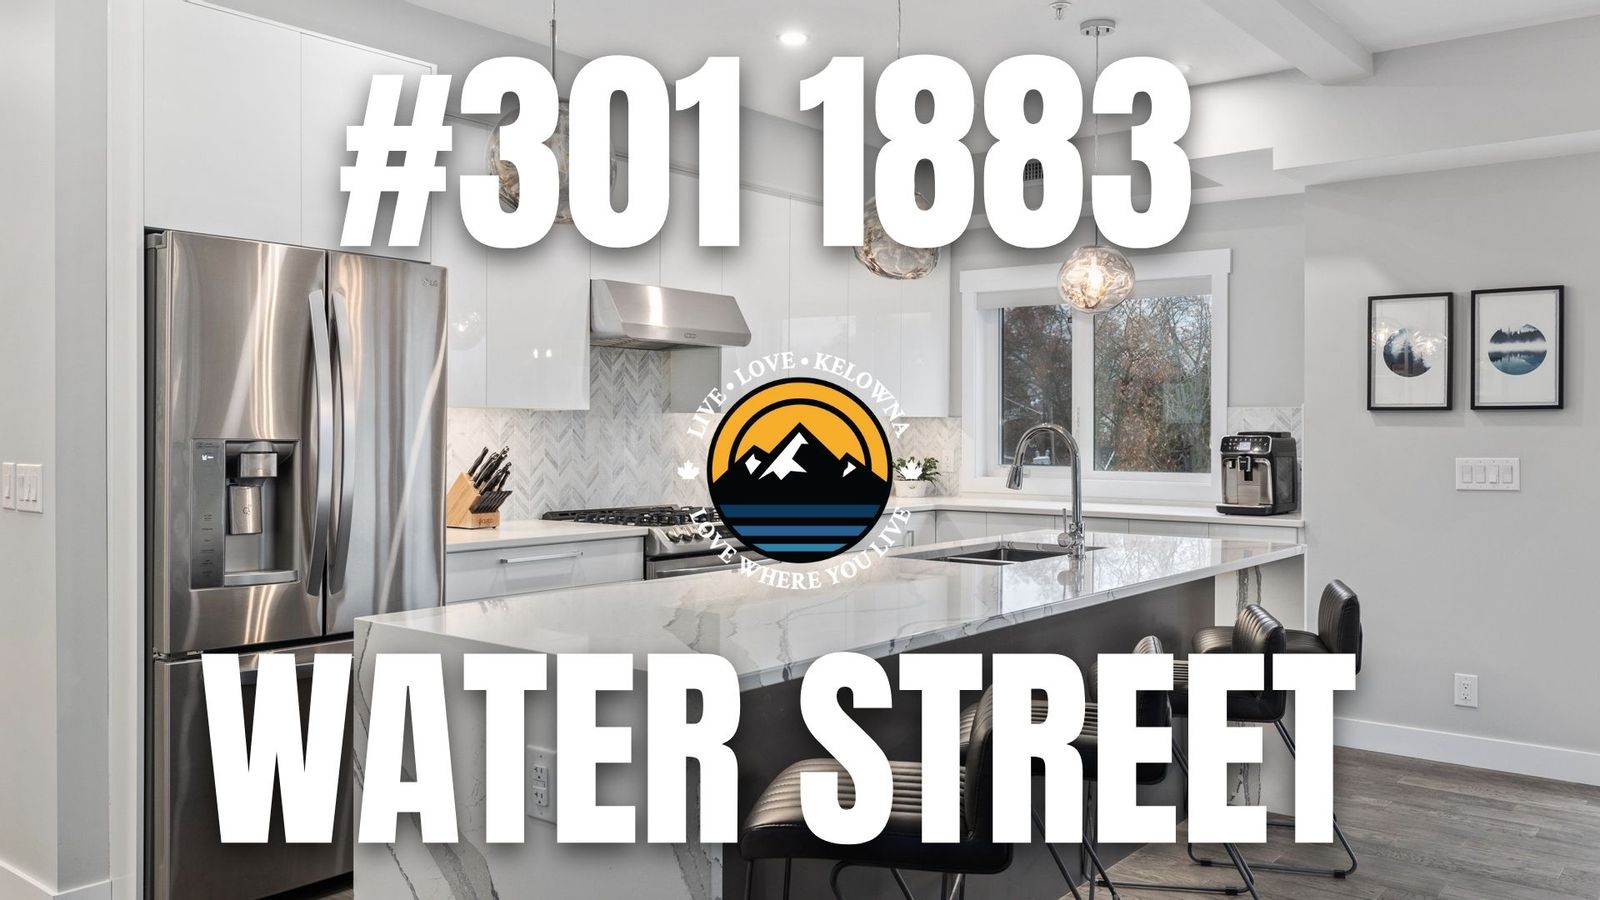 Kelowna Real Estate: For Sale #301 1883 Water Street